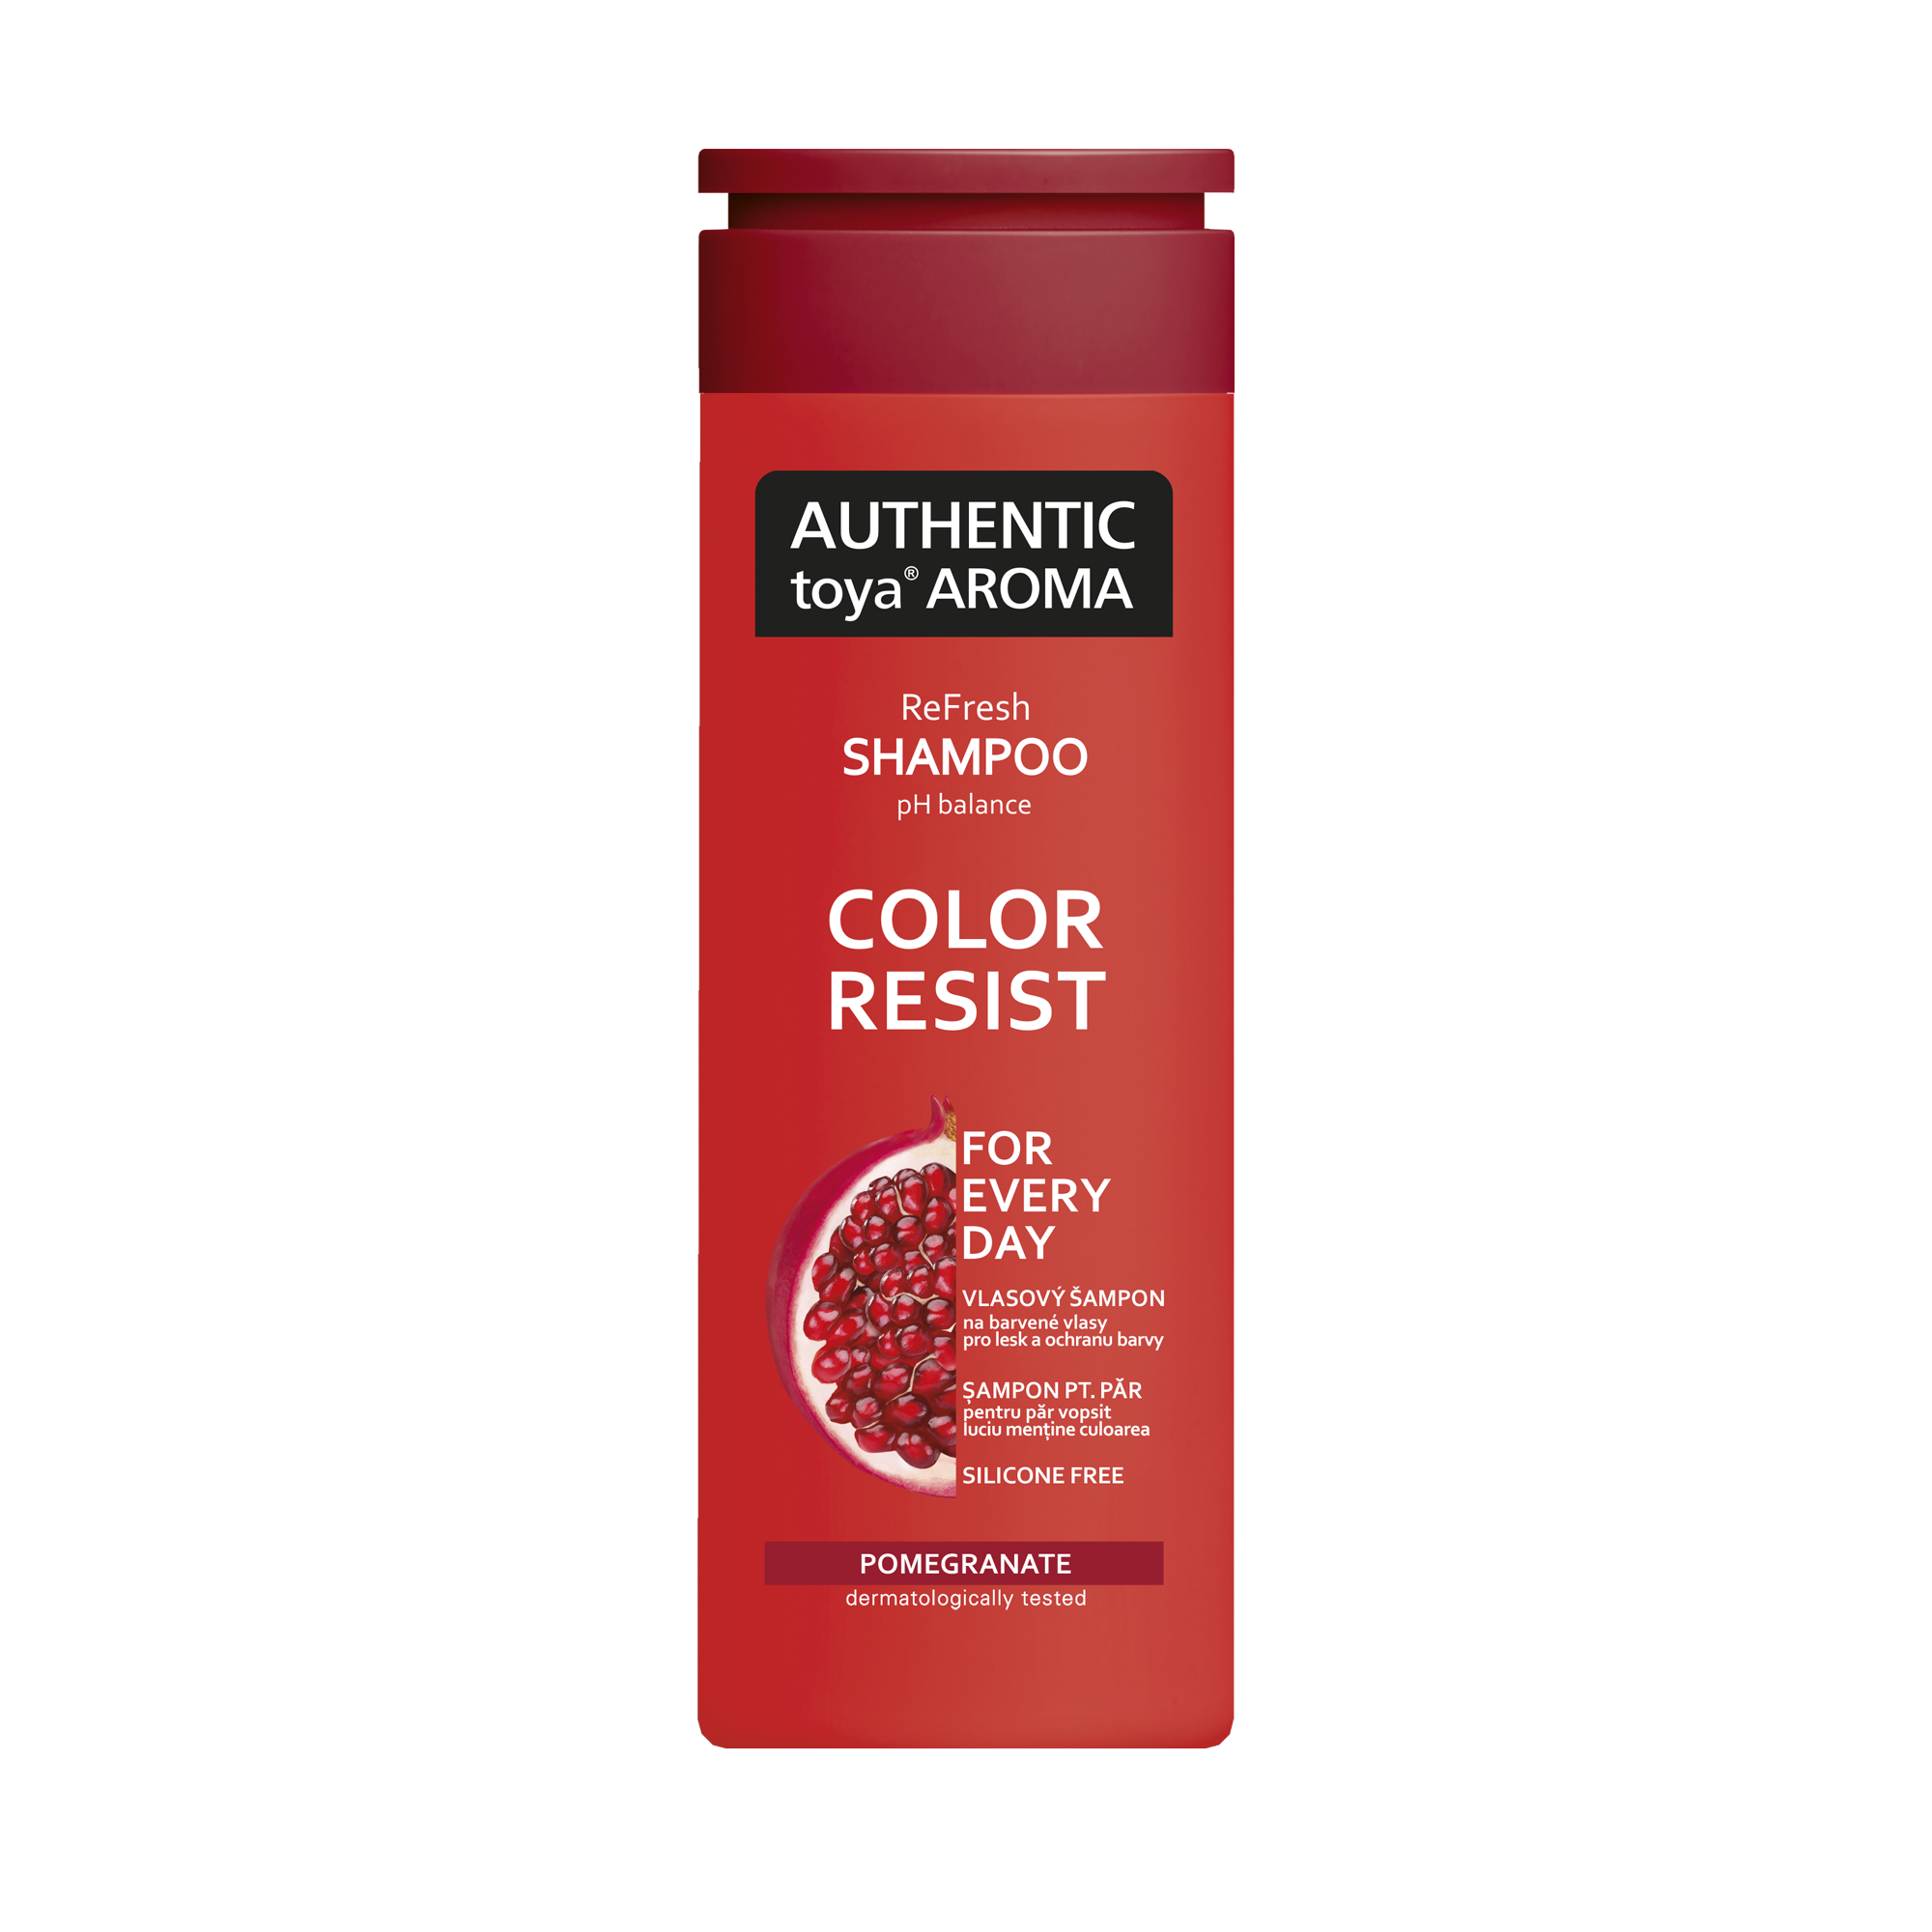 AUTHENTIC toya AROMA șampon de păr Color Resist